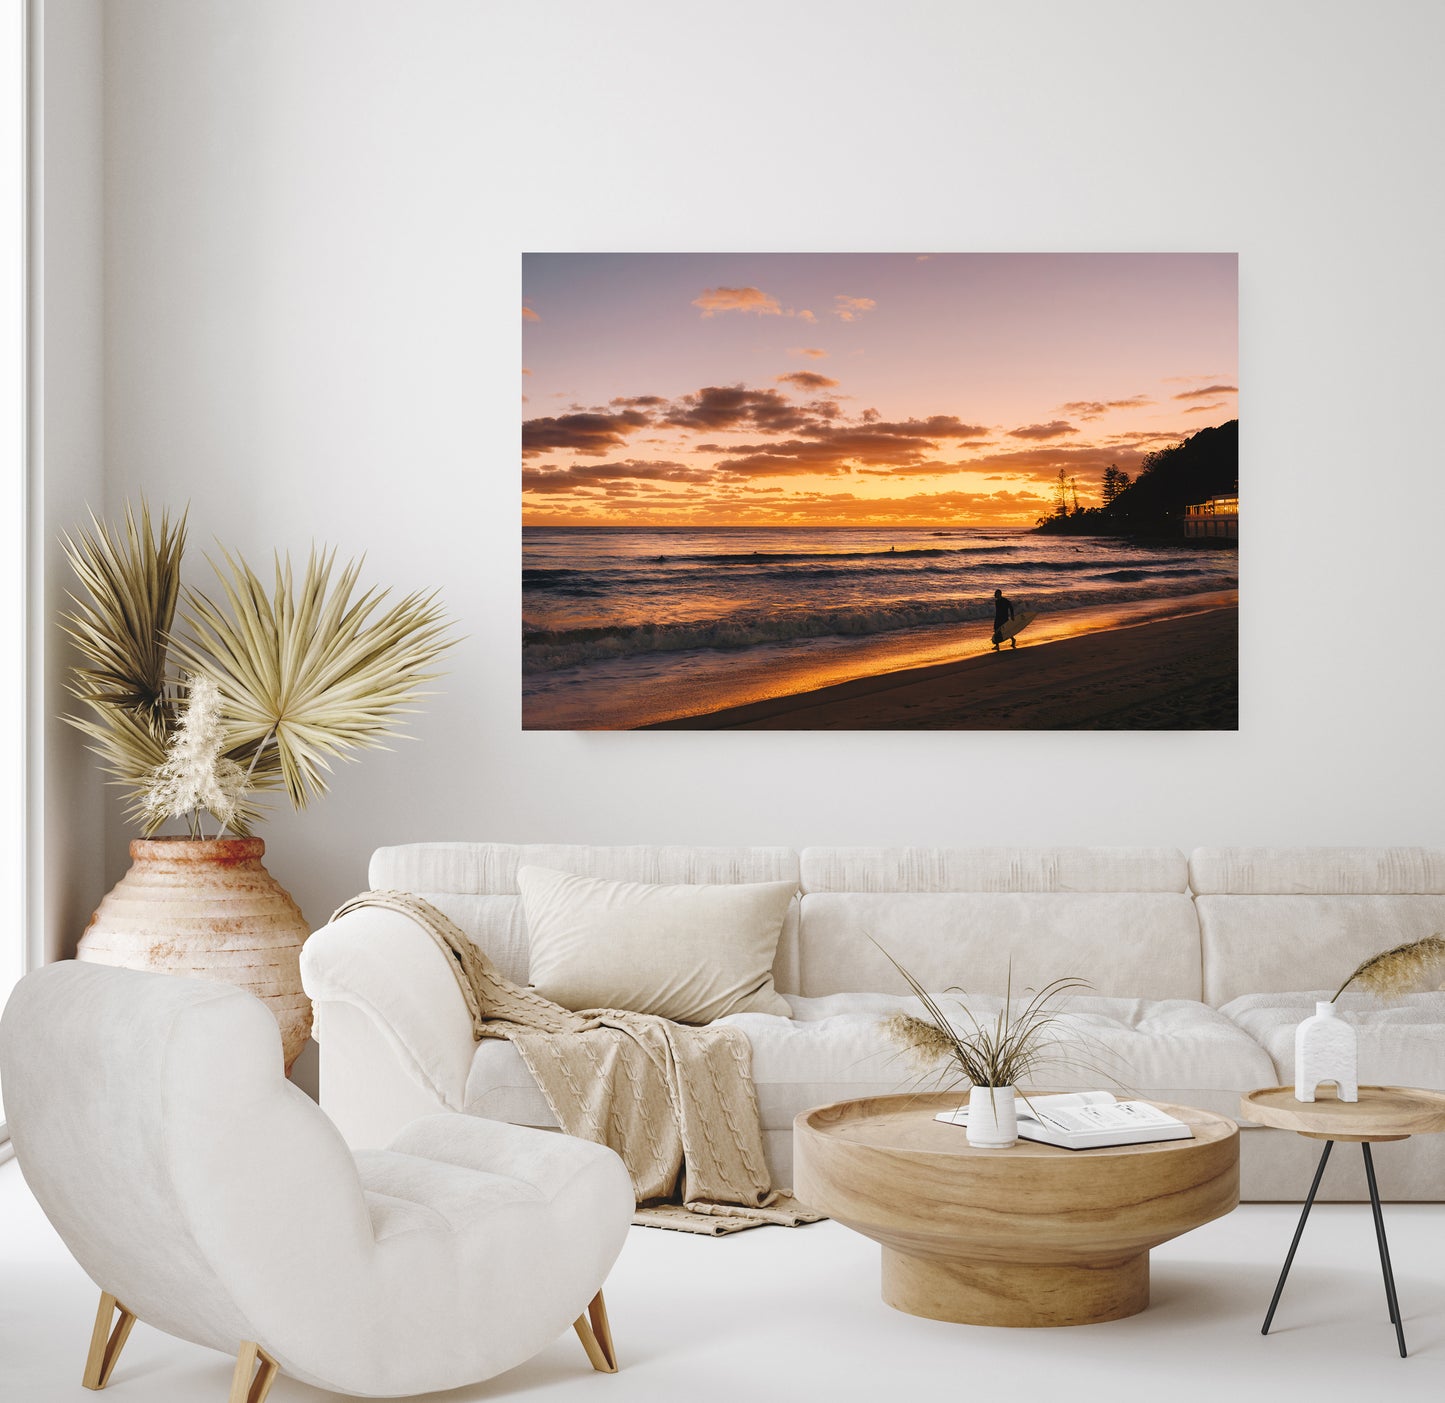 Sunrise Surf / Burleigh Heads, Queensland, Australia